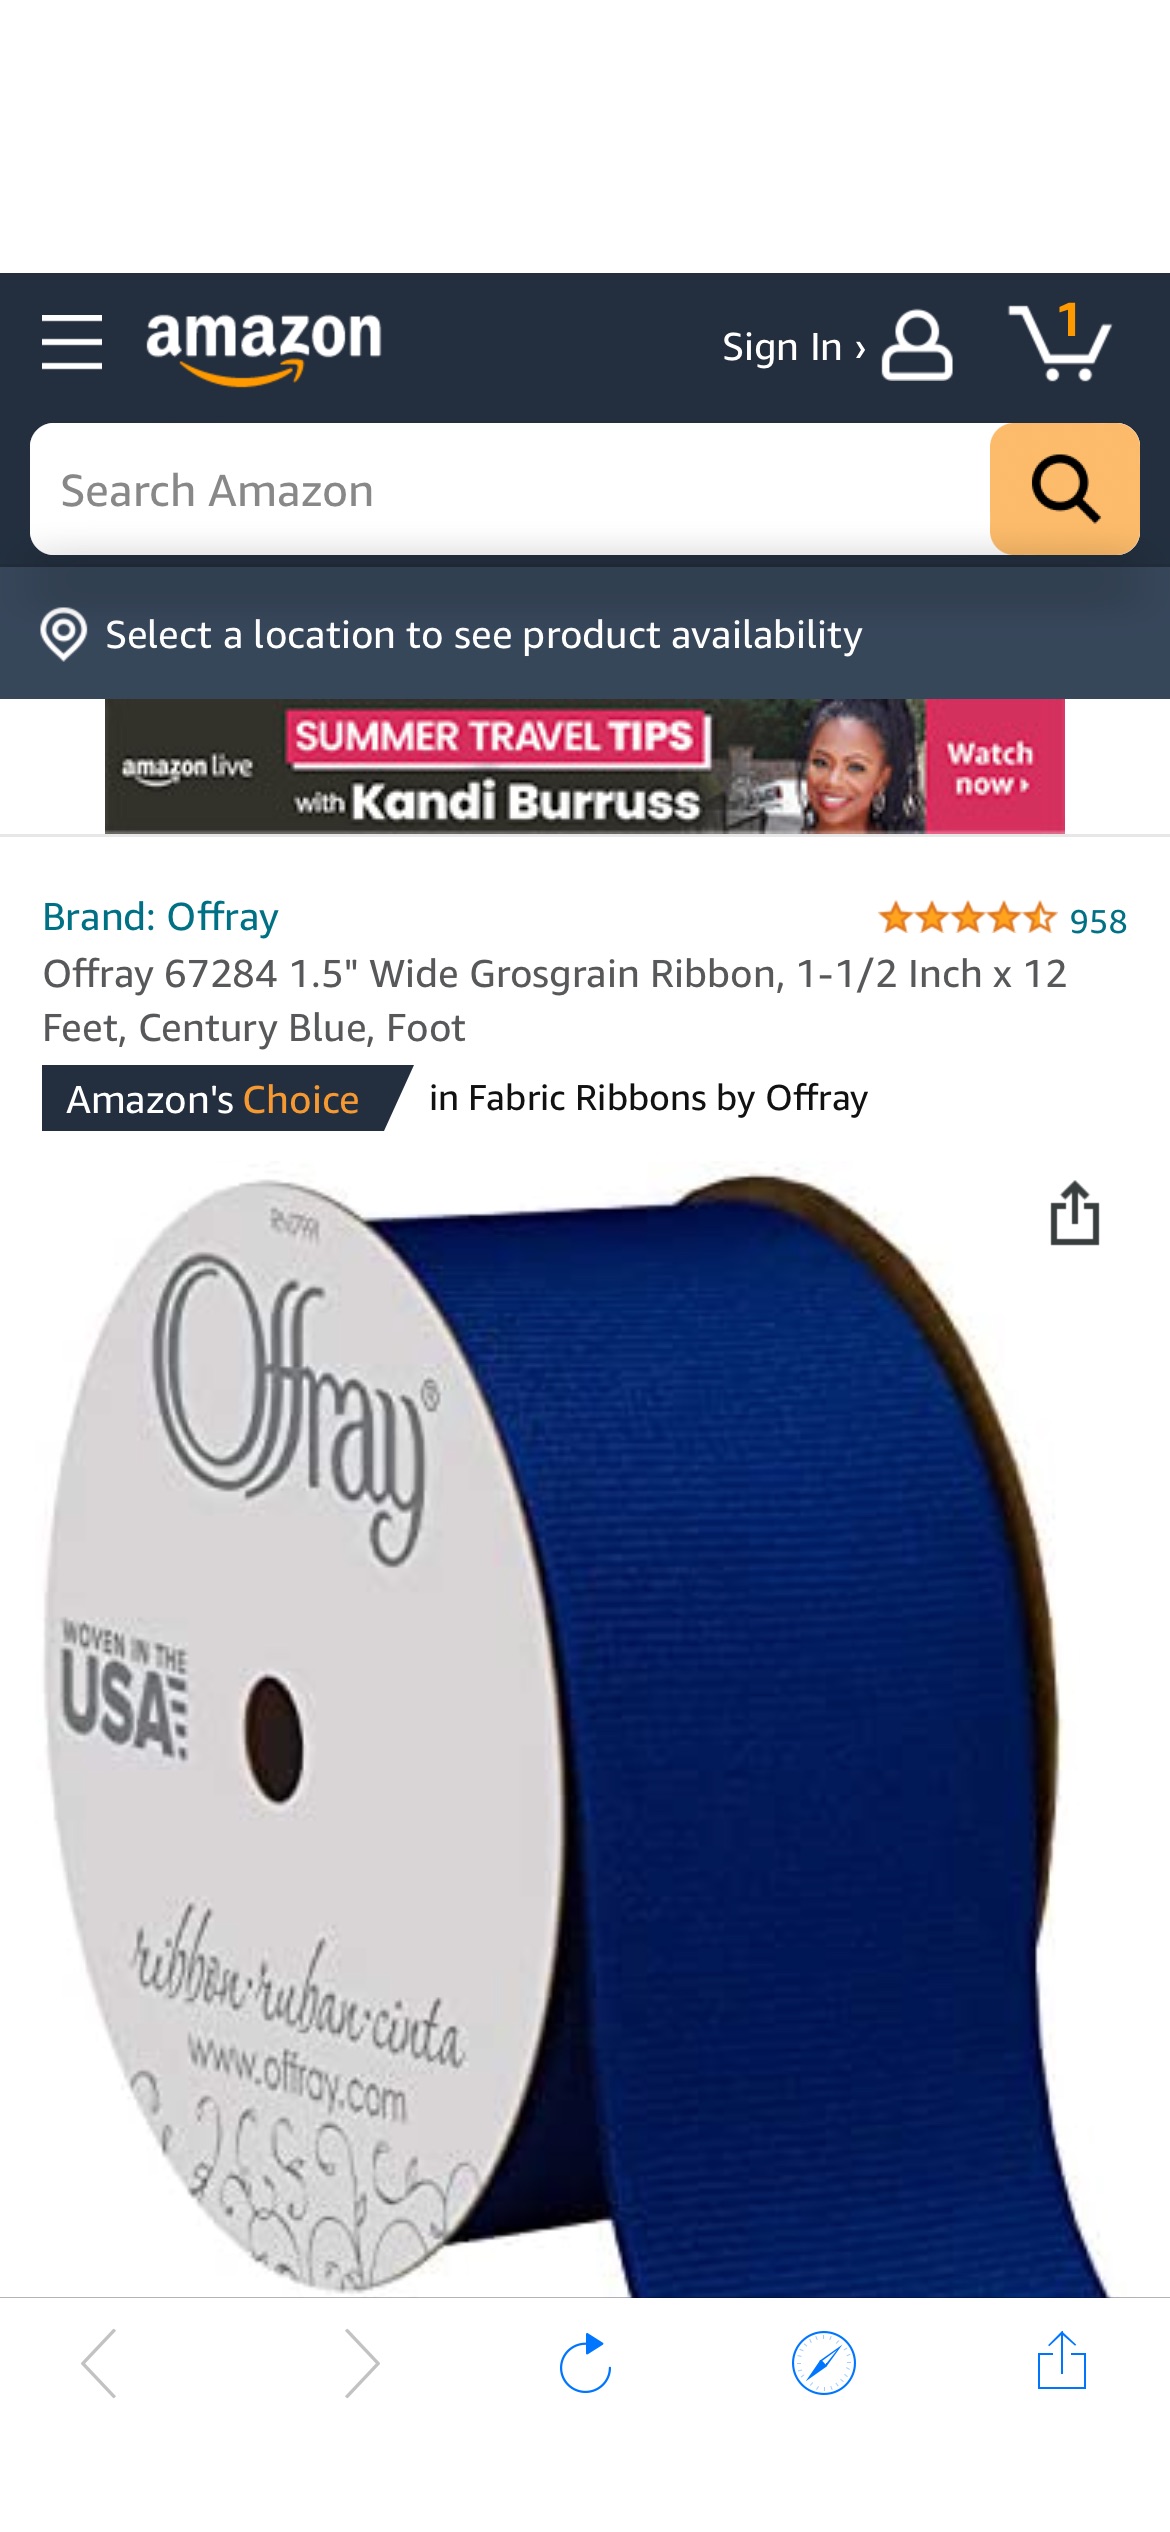 Amazon.com: Offray 67284 1.5" Wide Grosgrain Ribbon, 1-1/2 Inch x 12 Feet, Century Blue, Foot手工